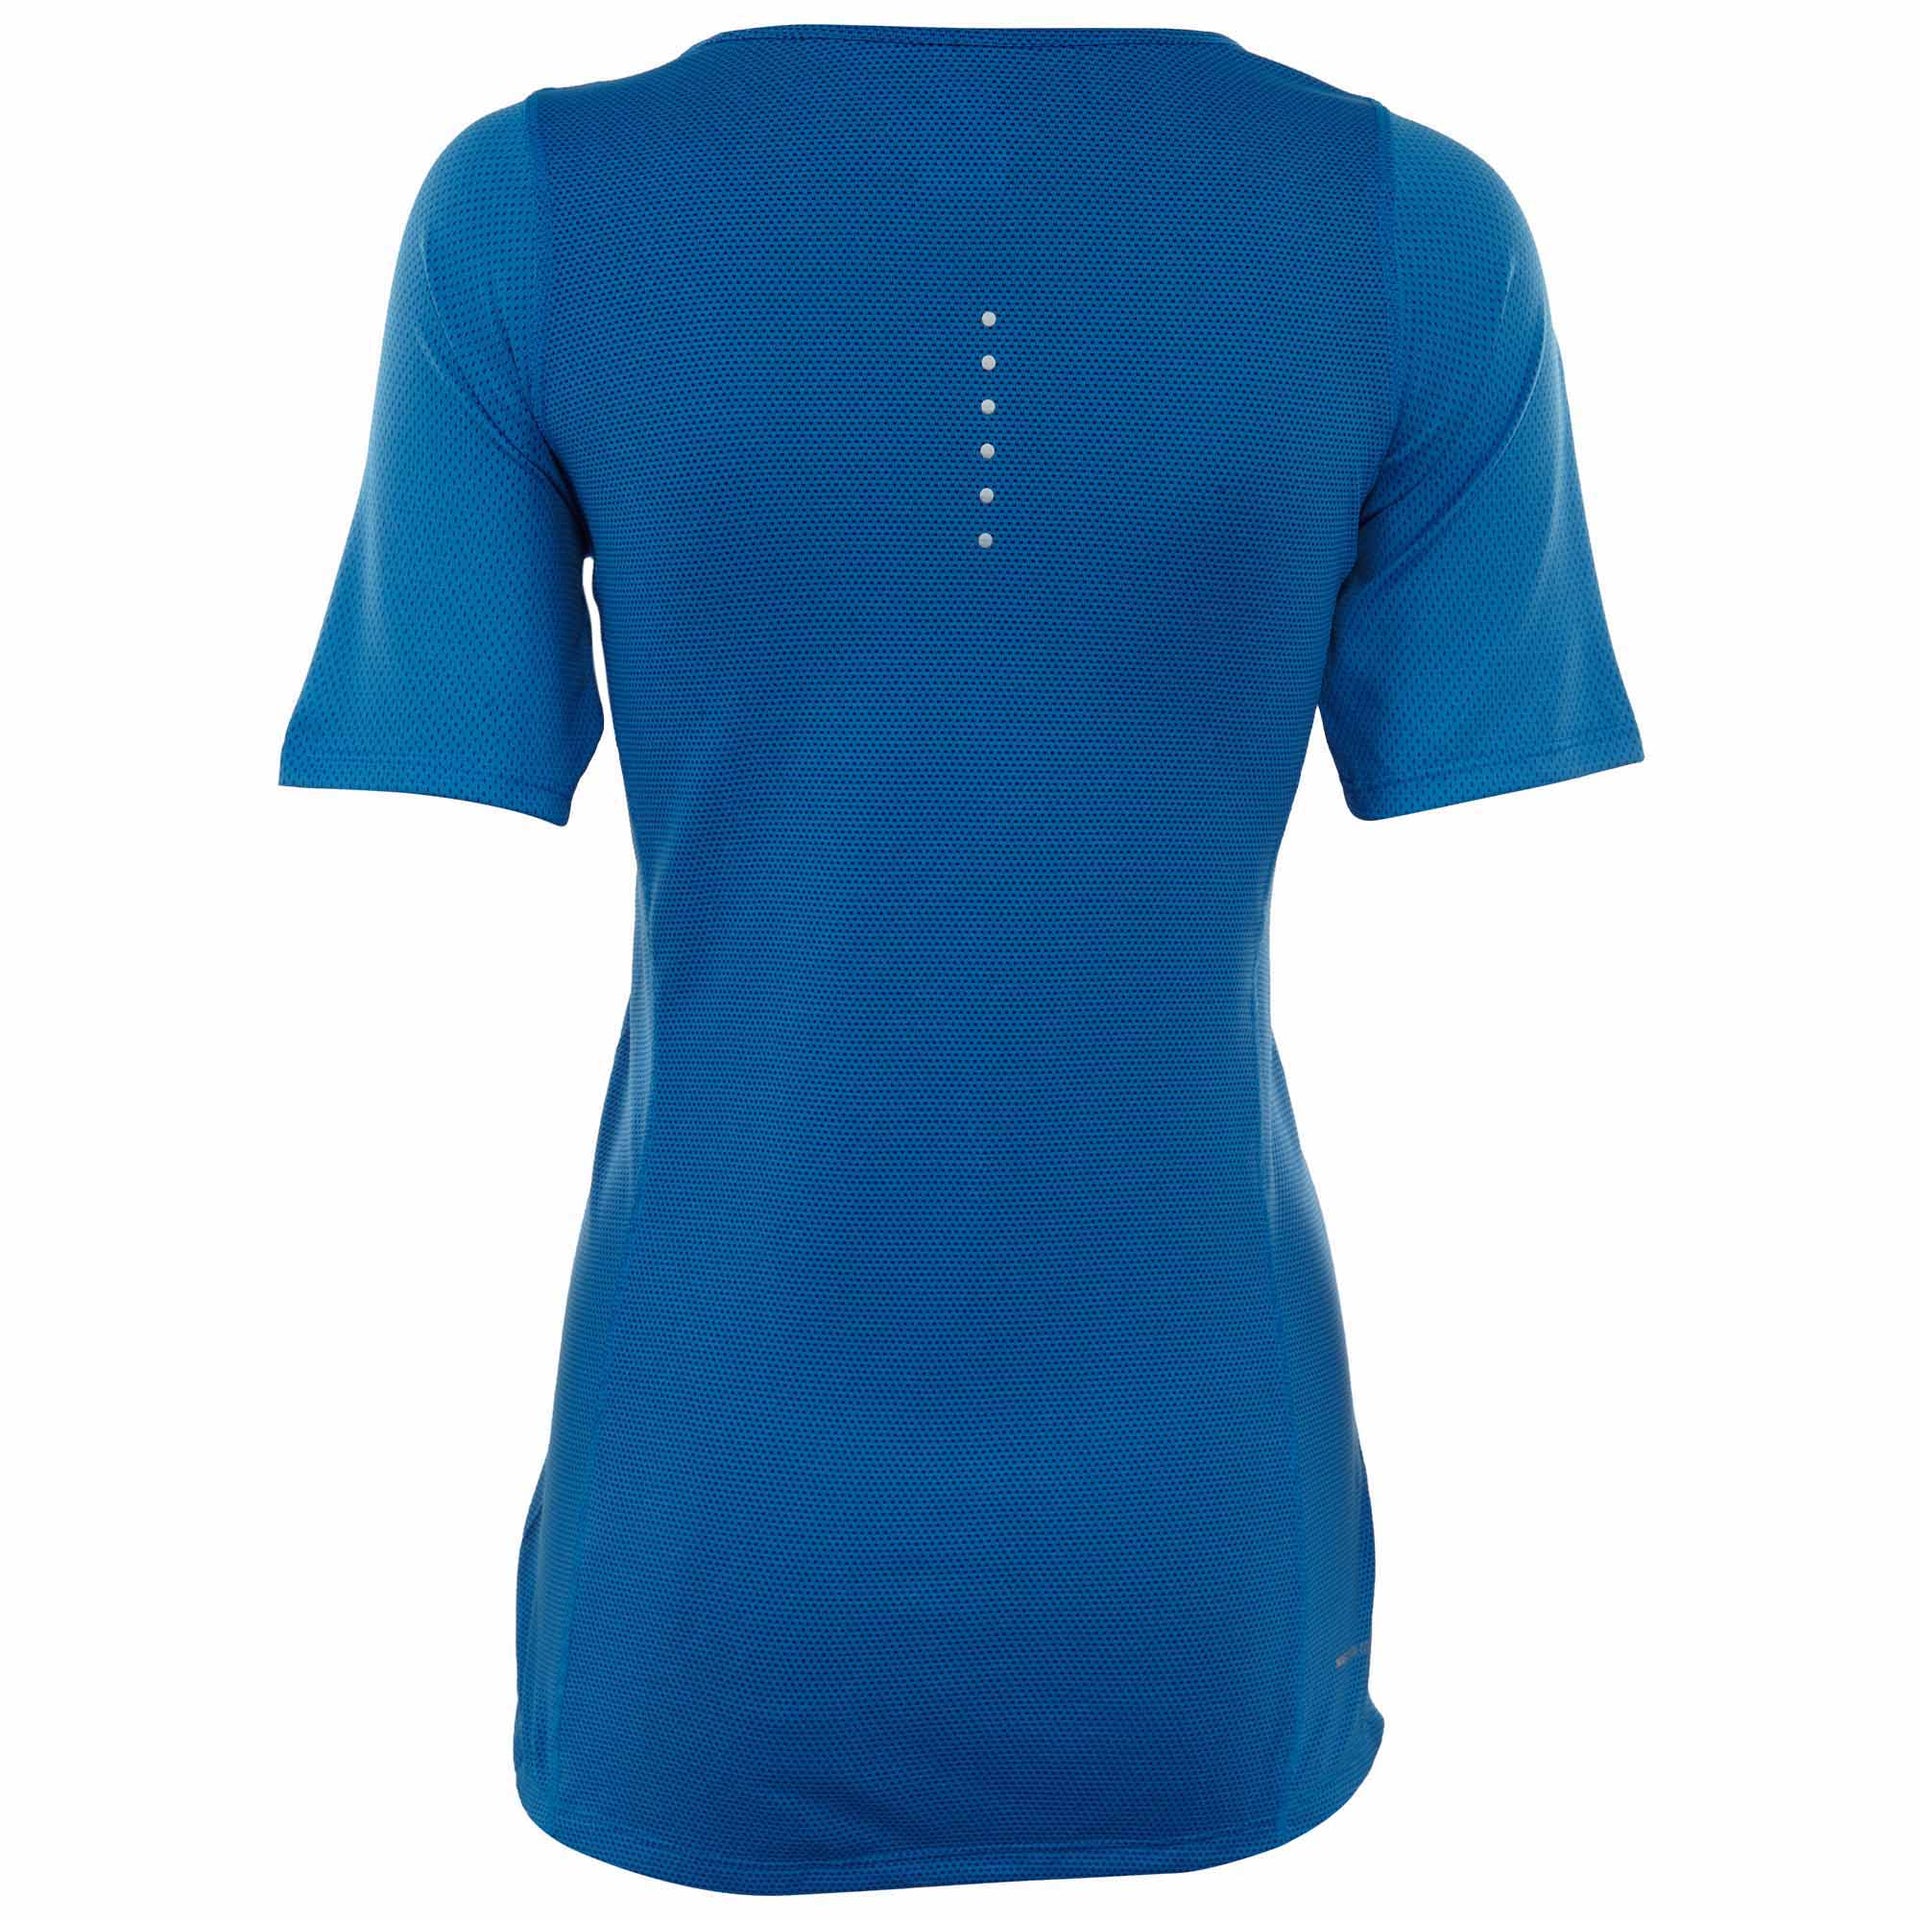 Nike Drifit Zonal Cool Relay Short Sleeve Womens Style : 831512